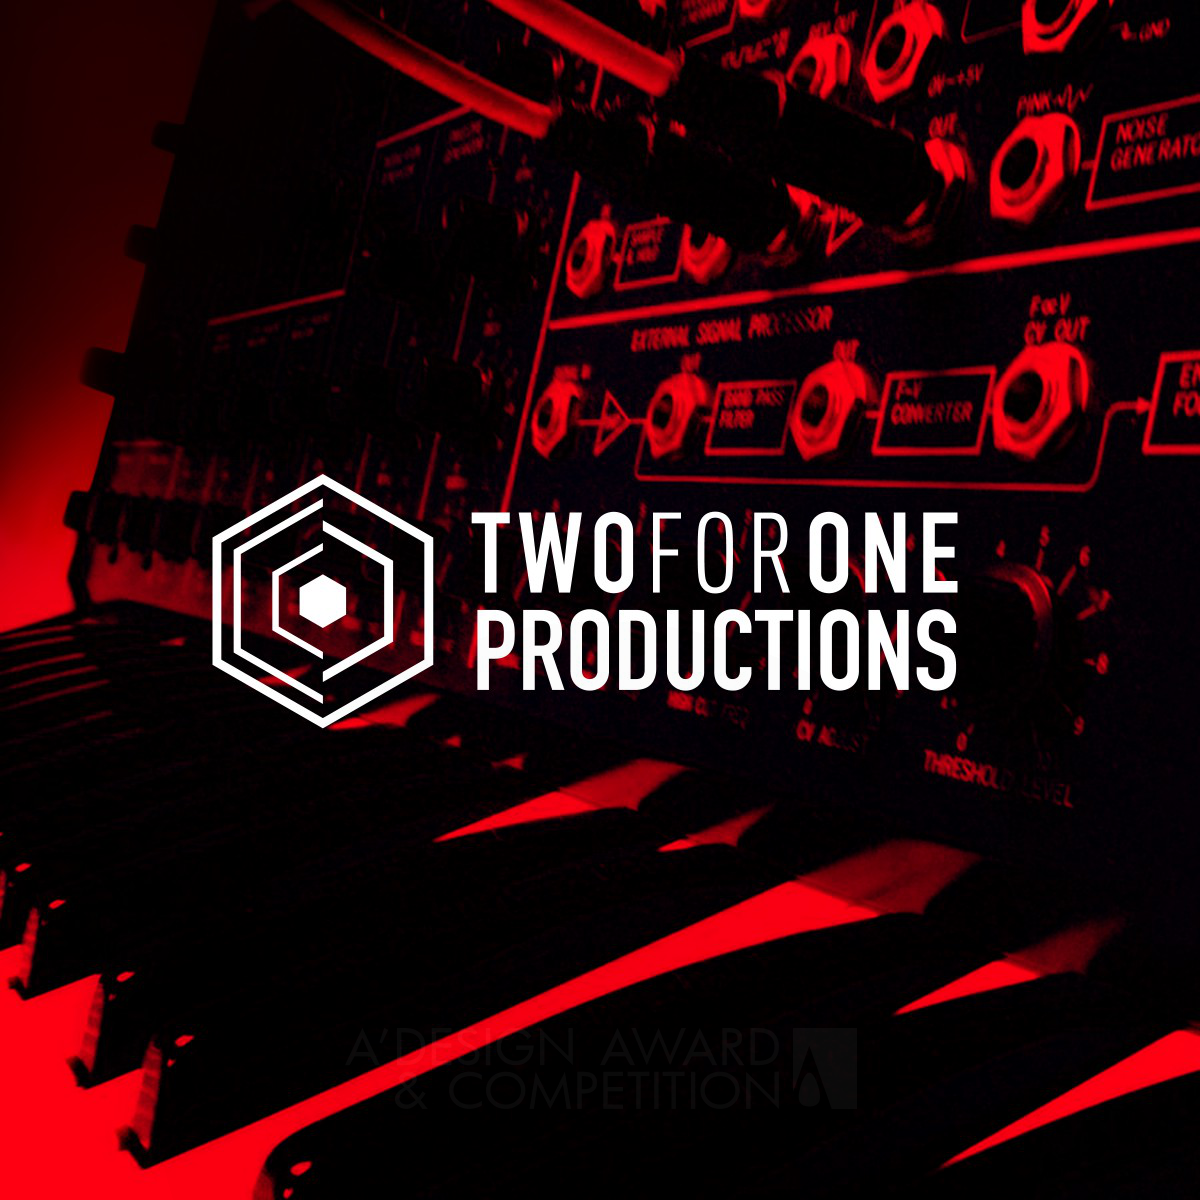 Twoforone Productions Corporate Identity by Elia Pittavino